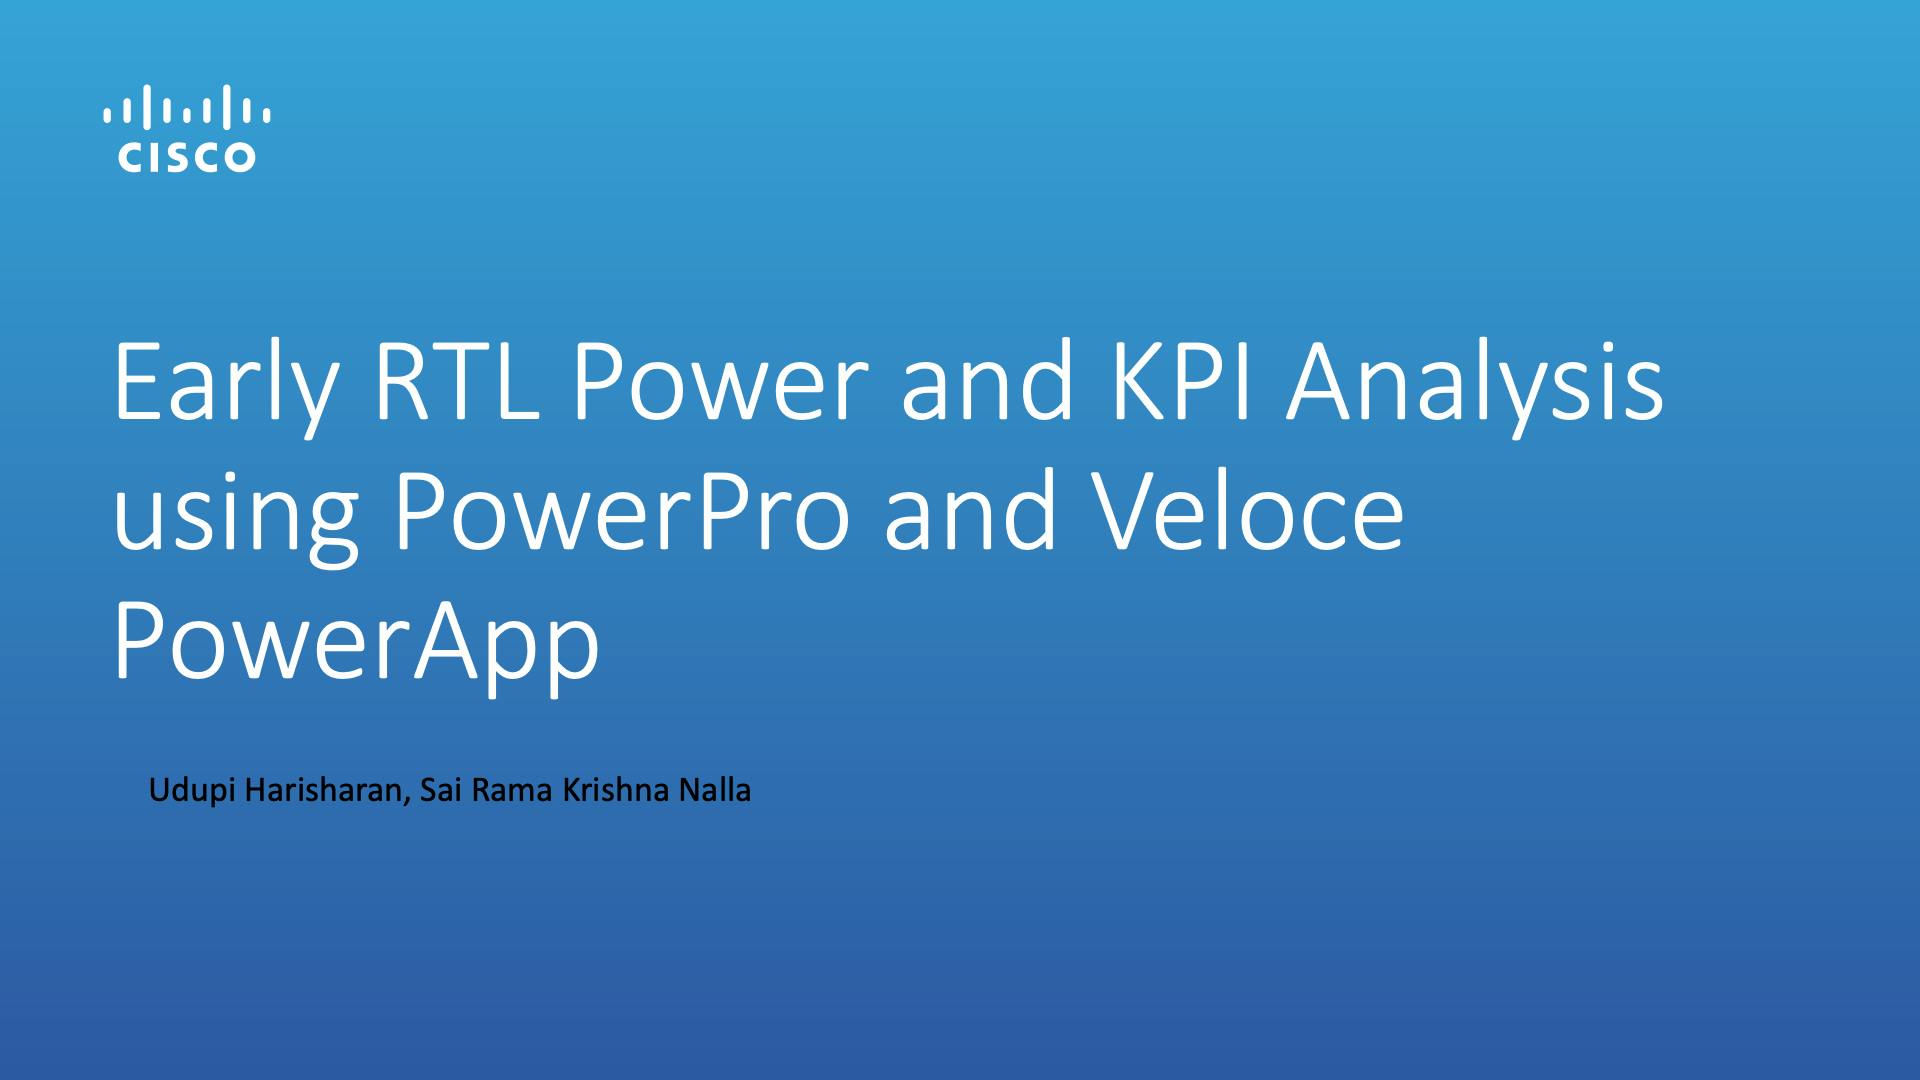 Cisco: Early RTL Power and KPI Analysis using PowerPro and Veloce PowerApp